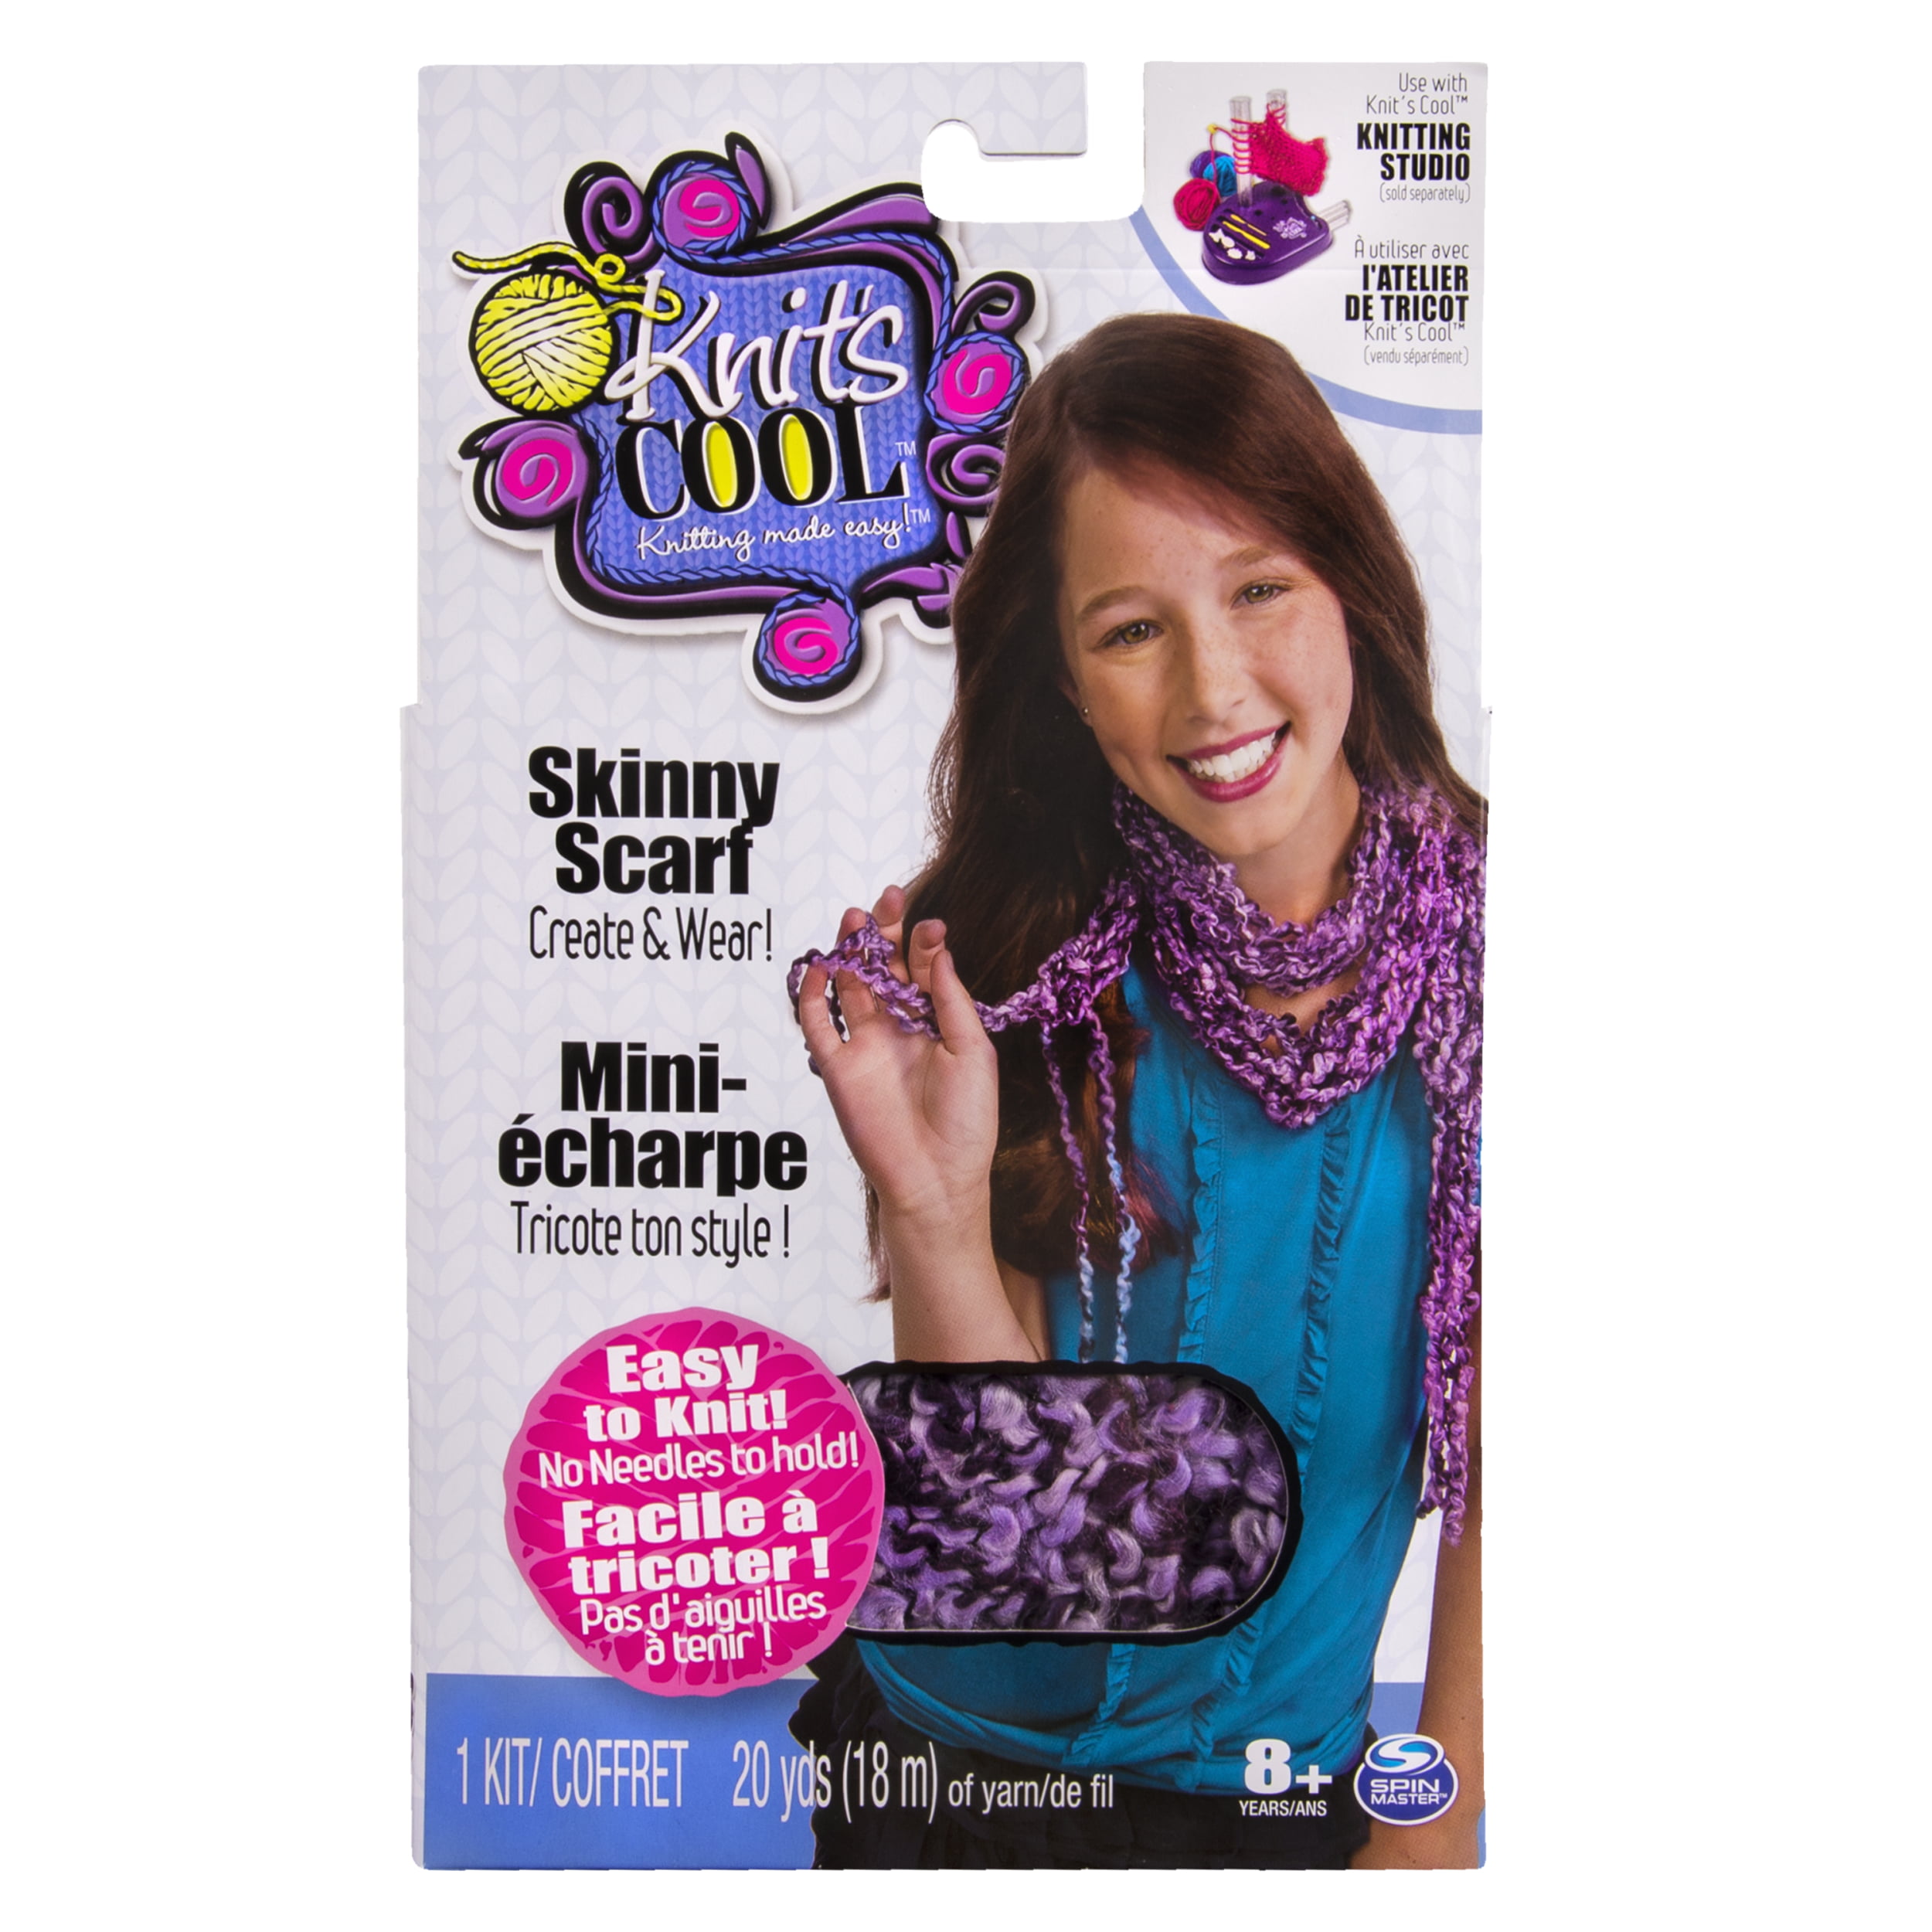 sold separately Spinmaster Knits Cool Wrap Bracelet Kit For Knitting Studio 